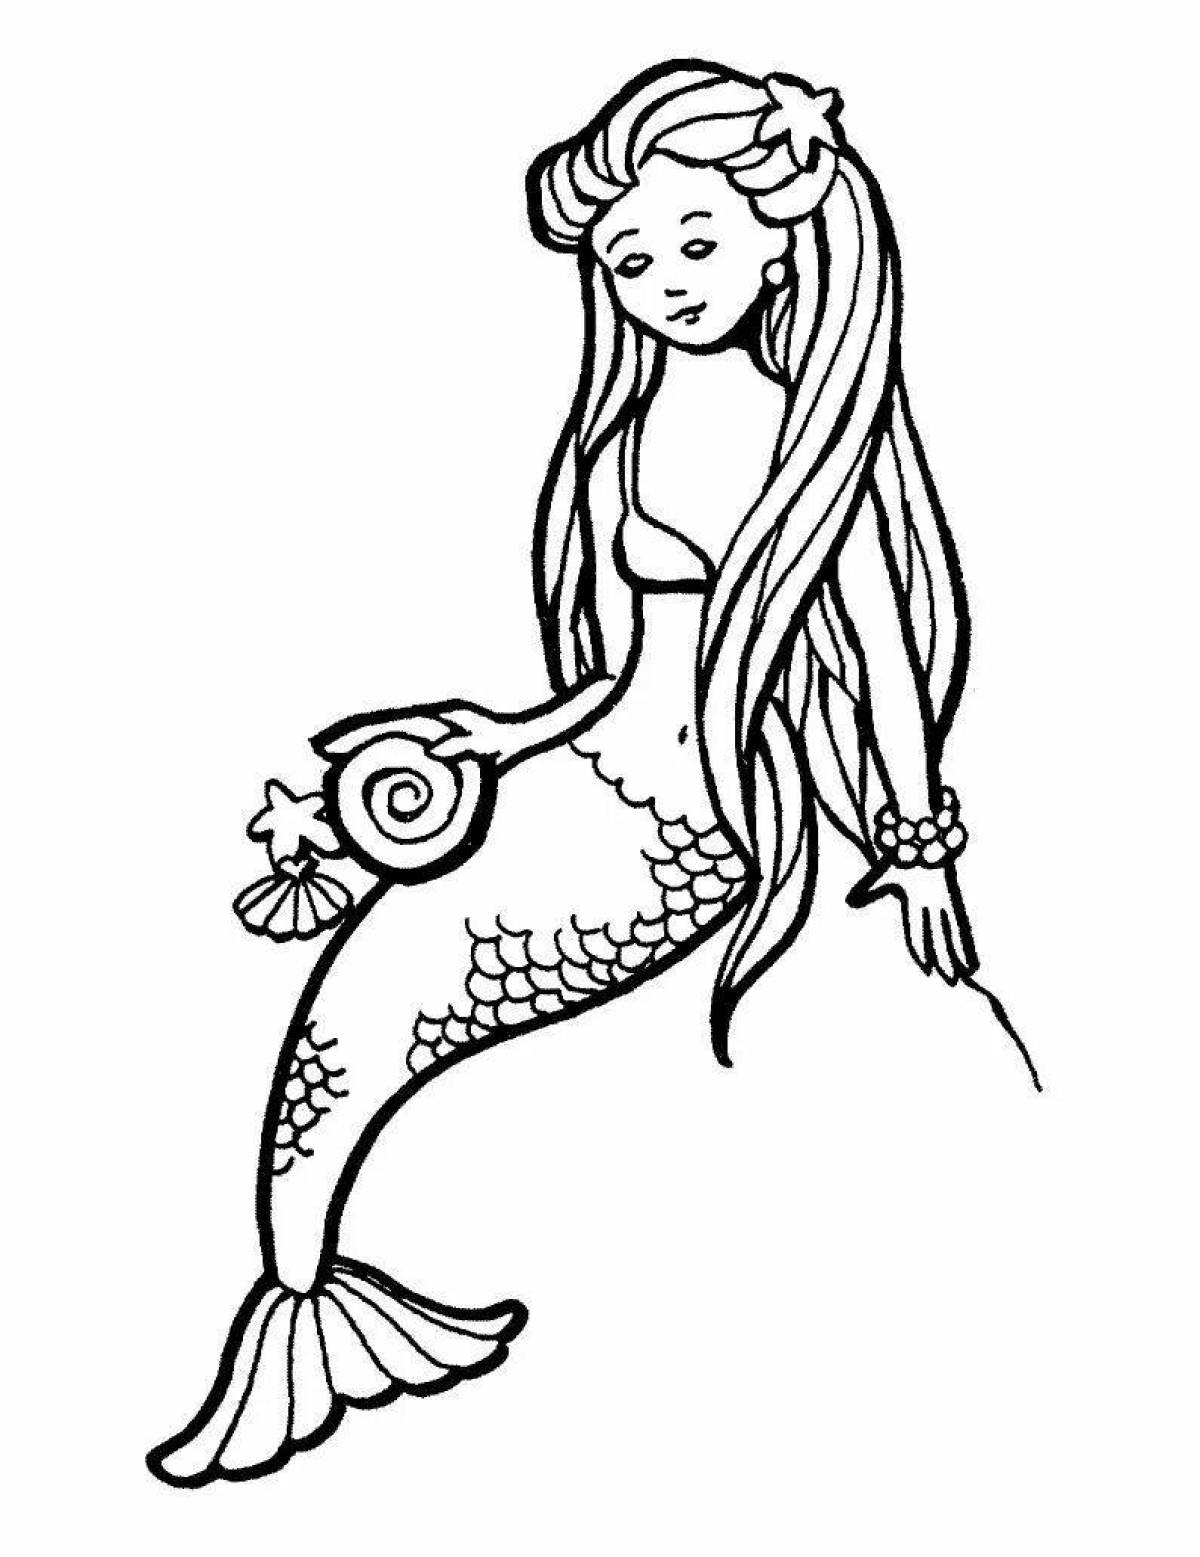 Coloring page bright mermaid queen